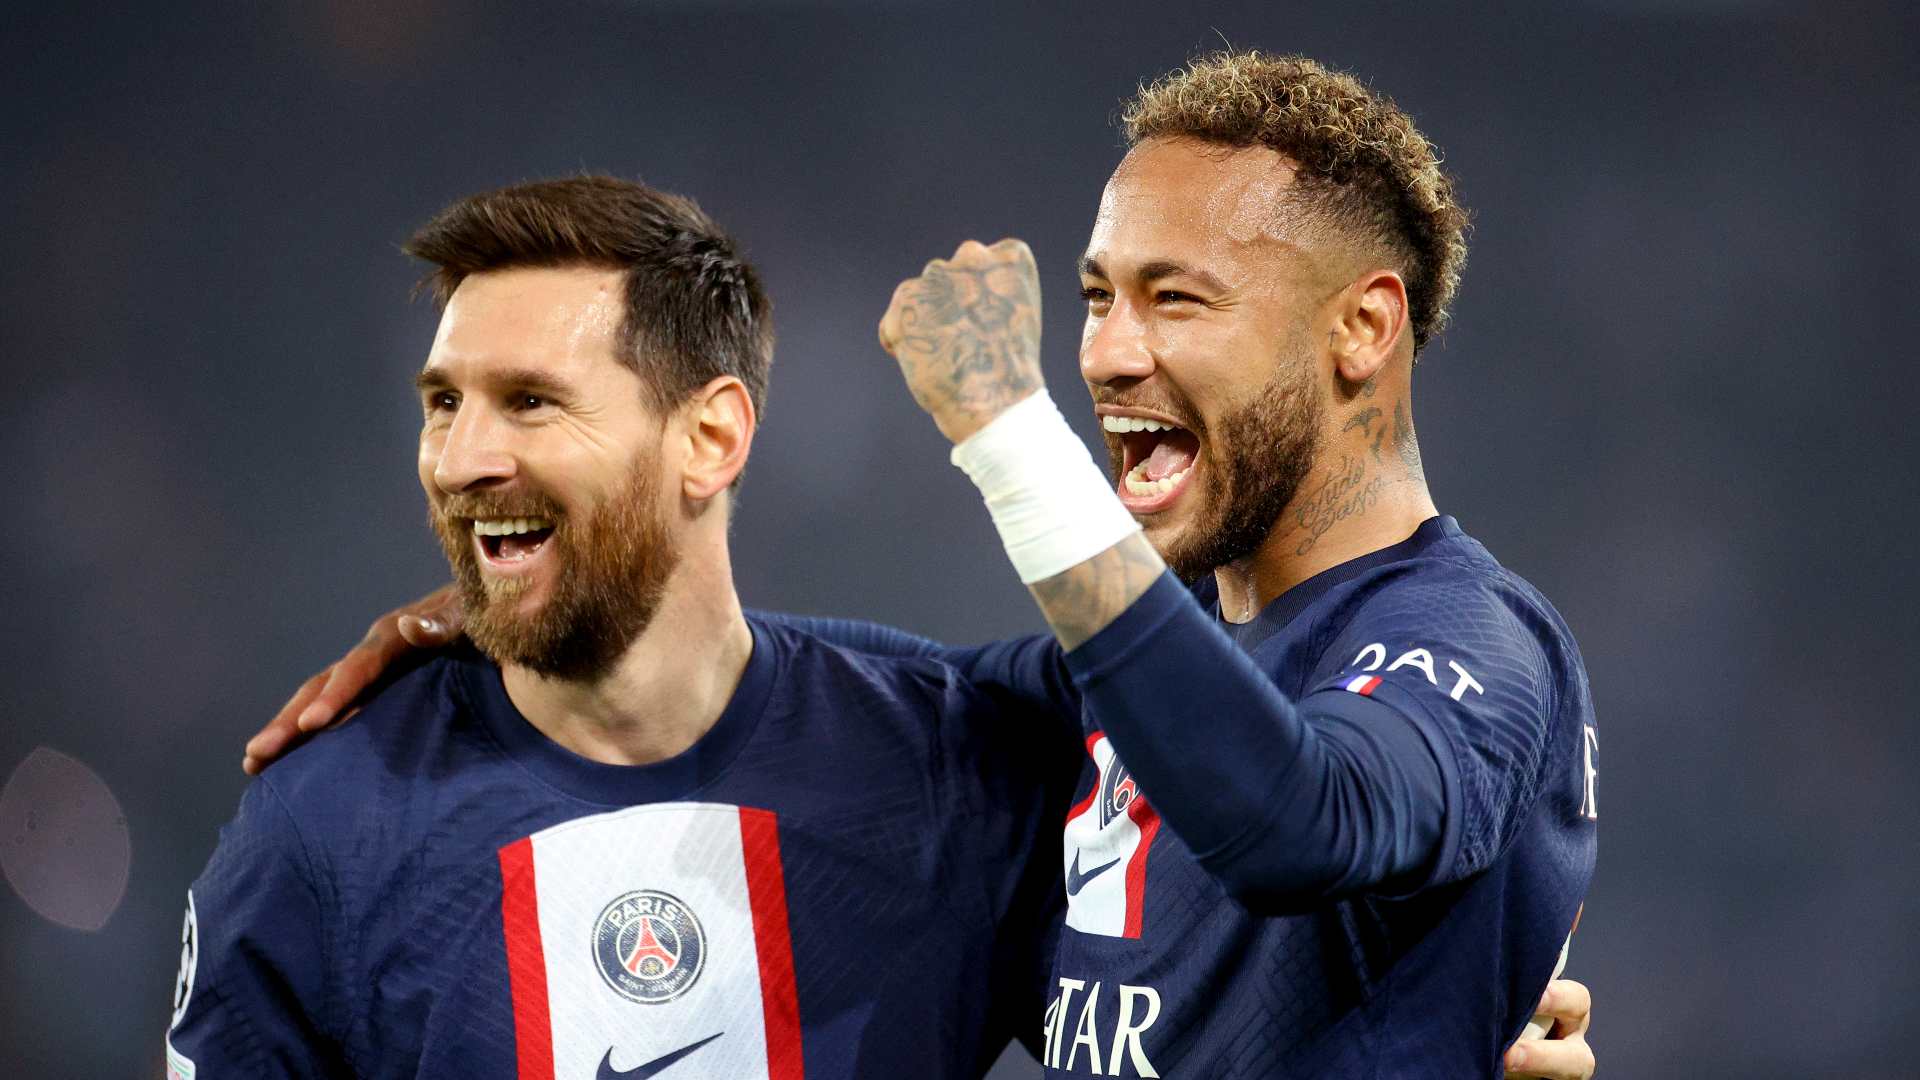 20221028-Ligue1-PSG-Messi-Neymar